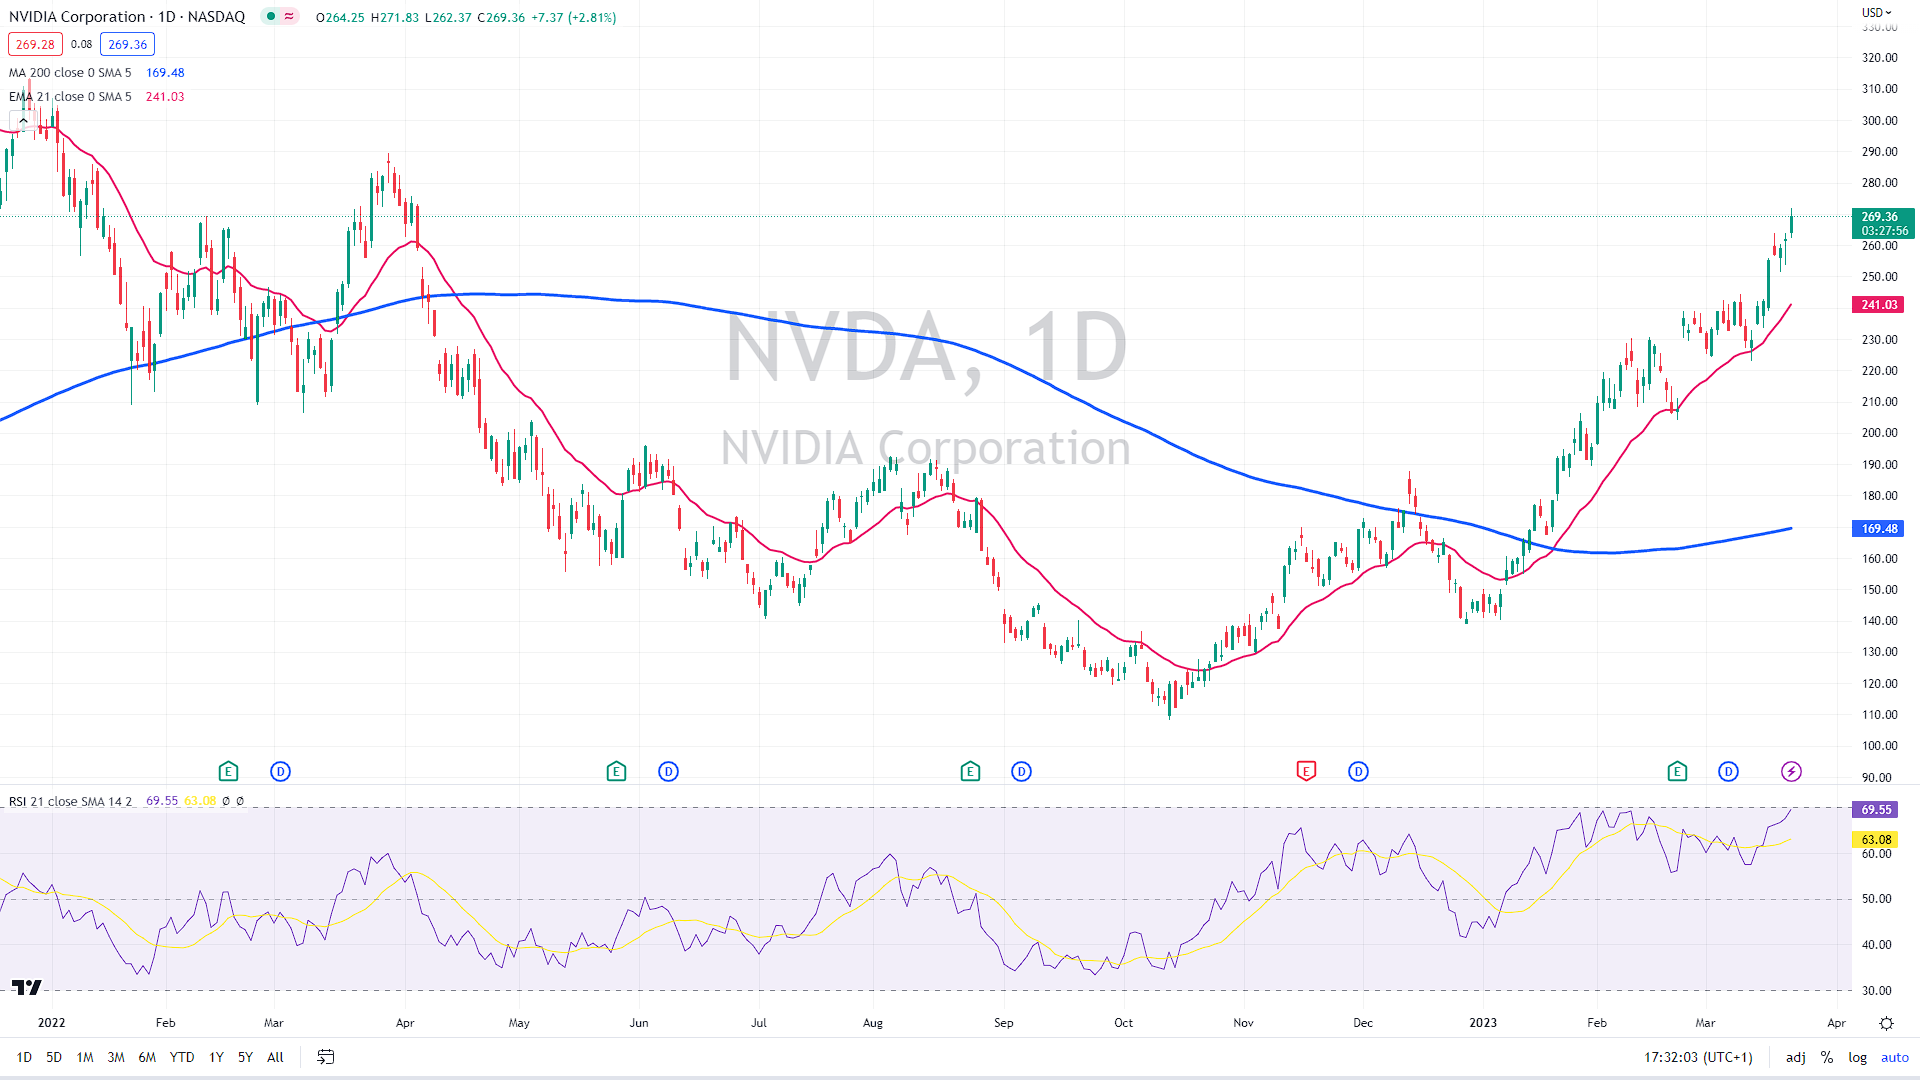 NVDA daily chart